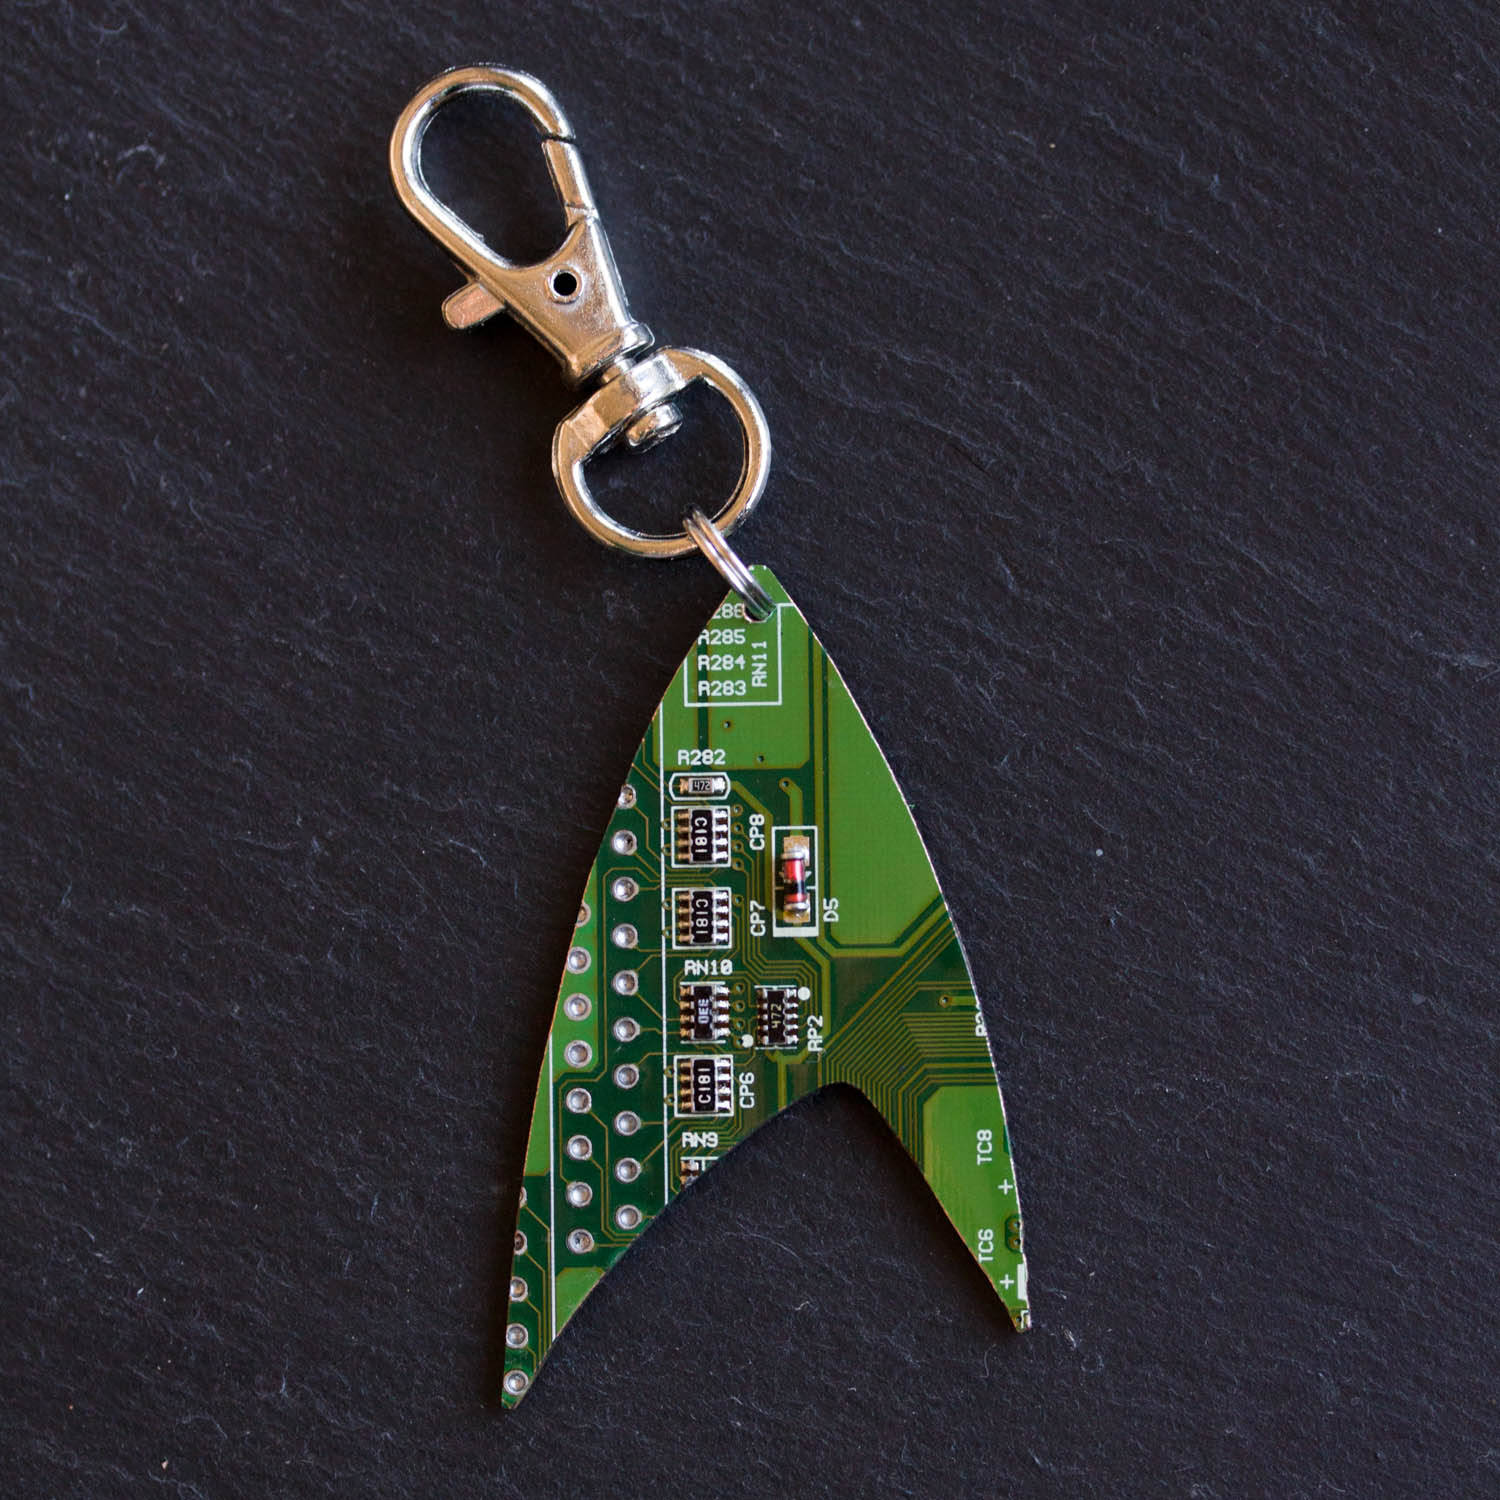 Star inspired keychain, Circuit board keychain or bag tag